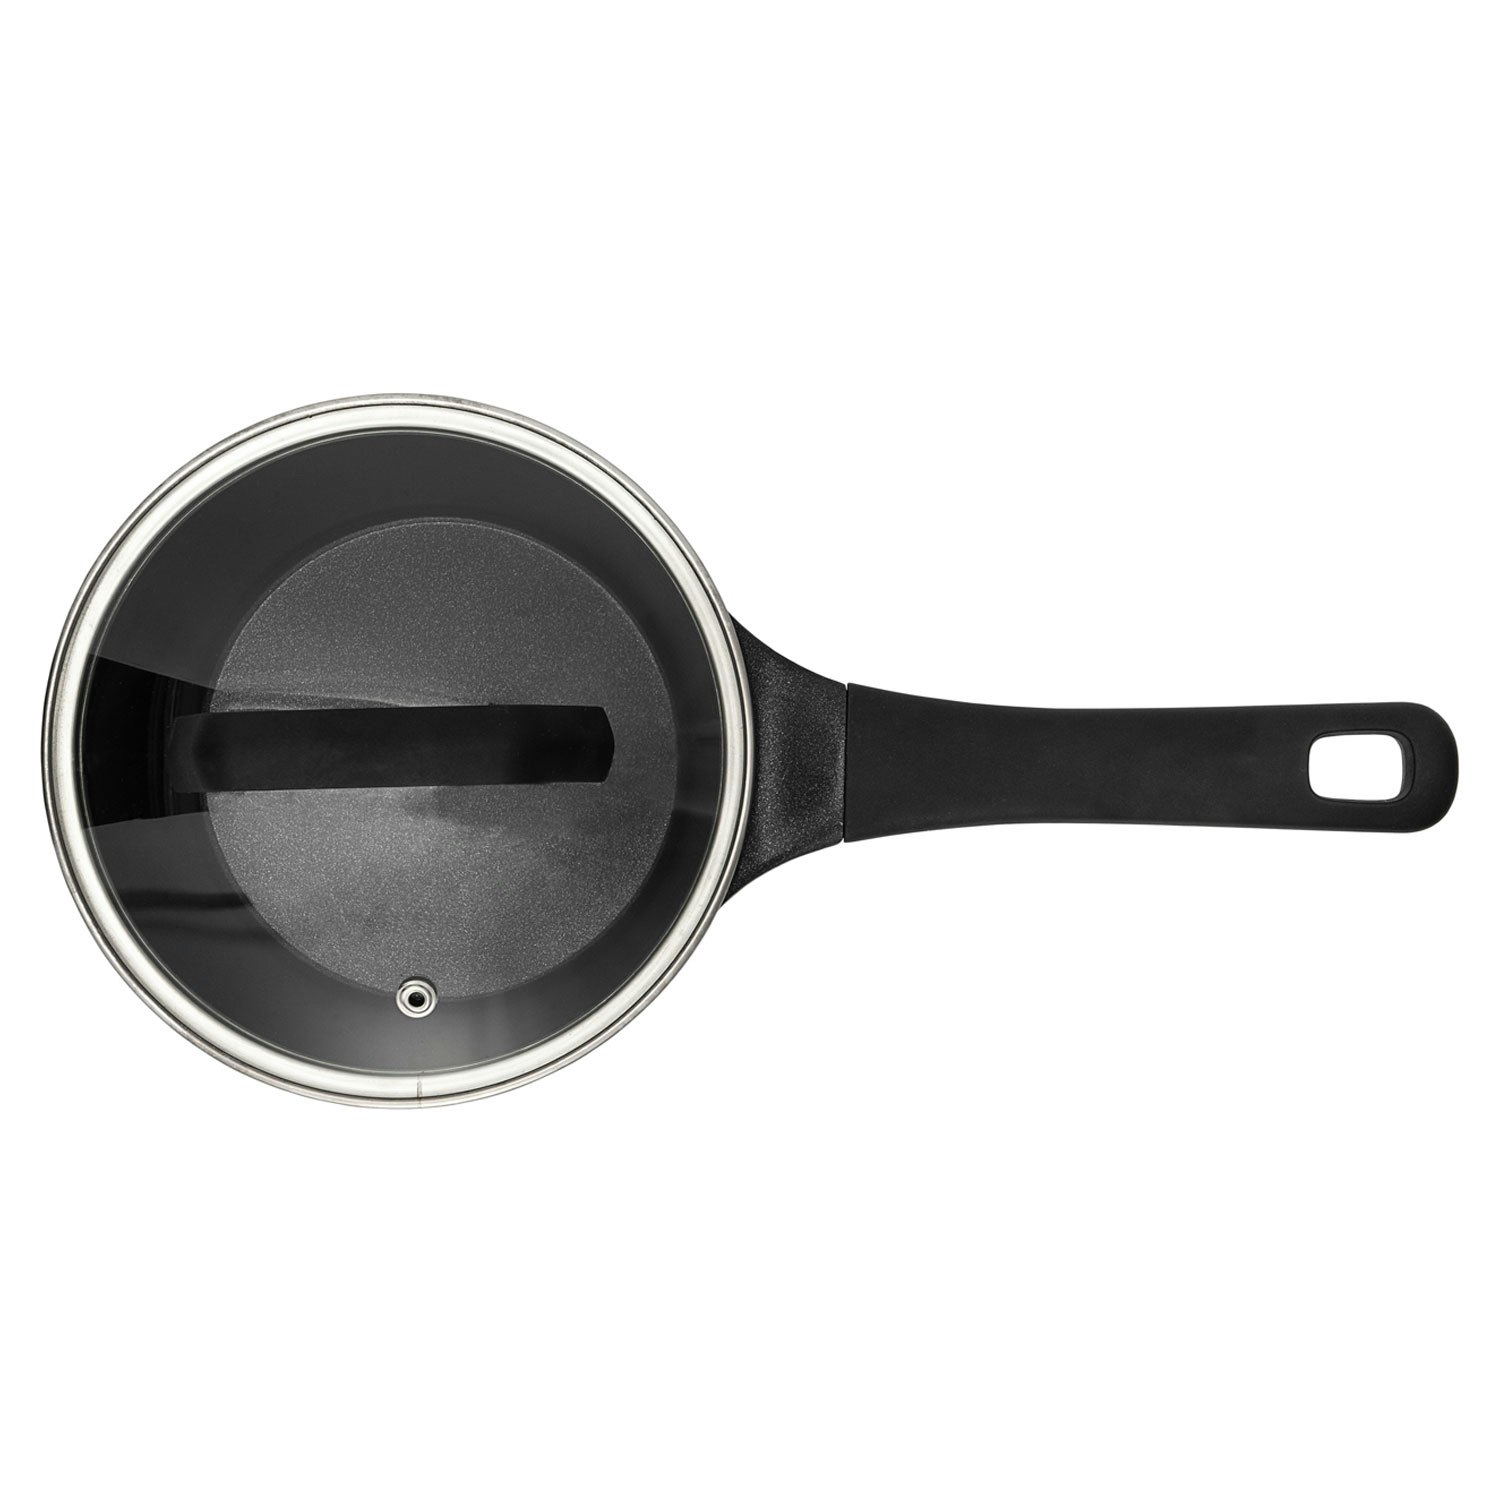 https://royaldesign.com/image/2/heirol-groove-saucepan-with-glass-lid-16-cm-3